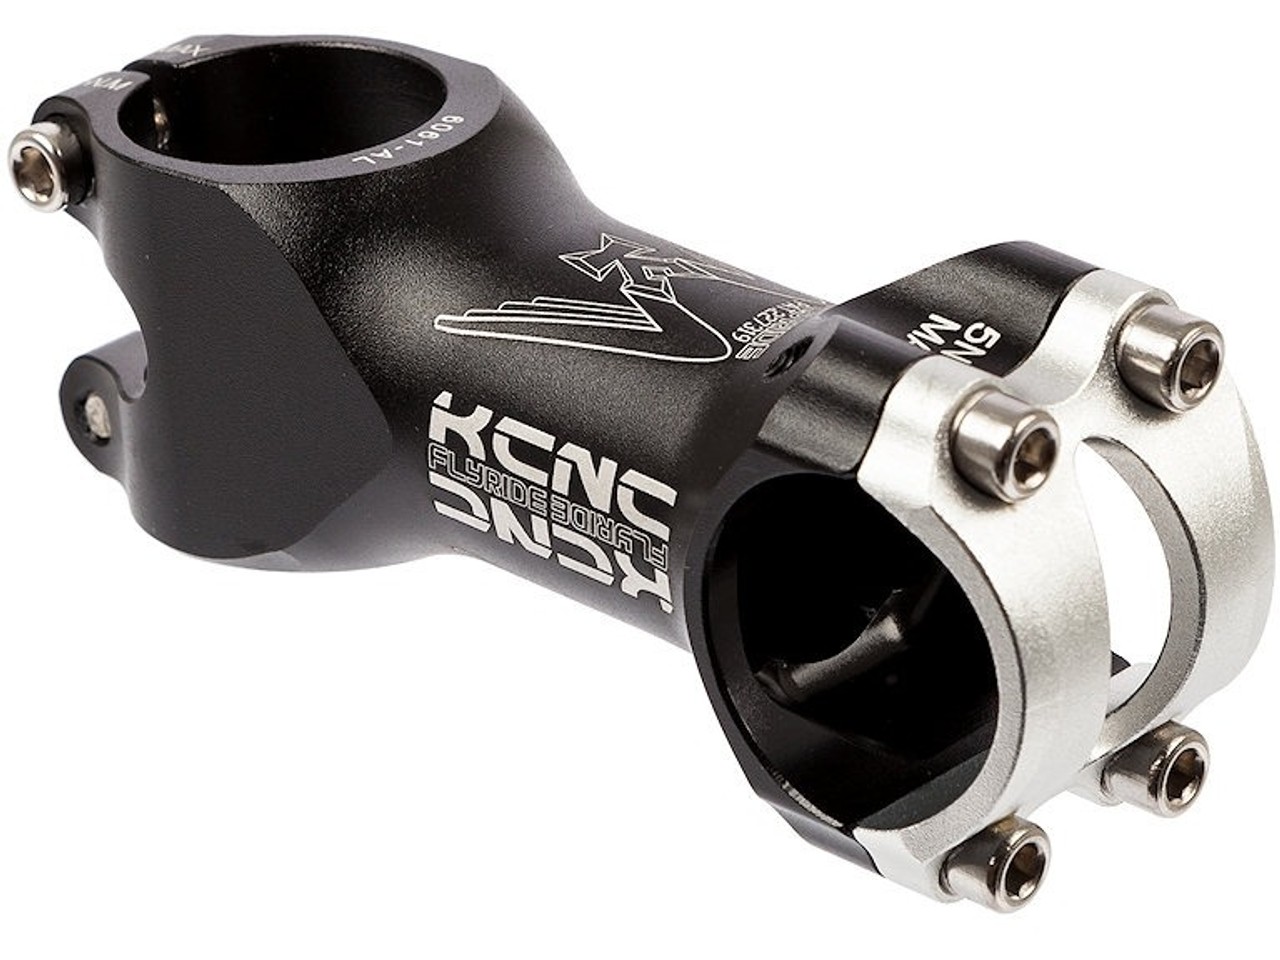 KCNC FLY RIDE 110mm 1 1/8" ALUMINIUM STEM 123g Black XC MTB 